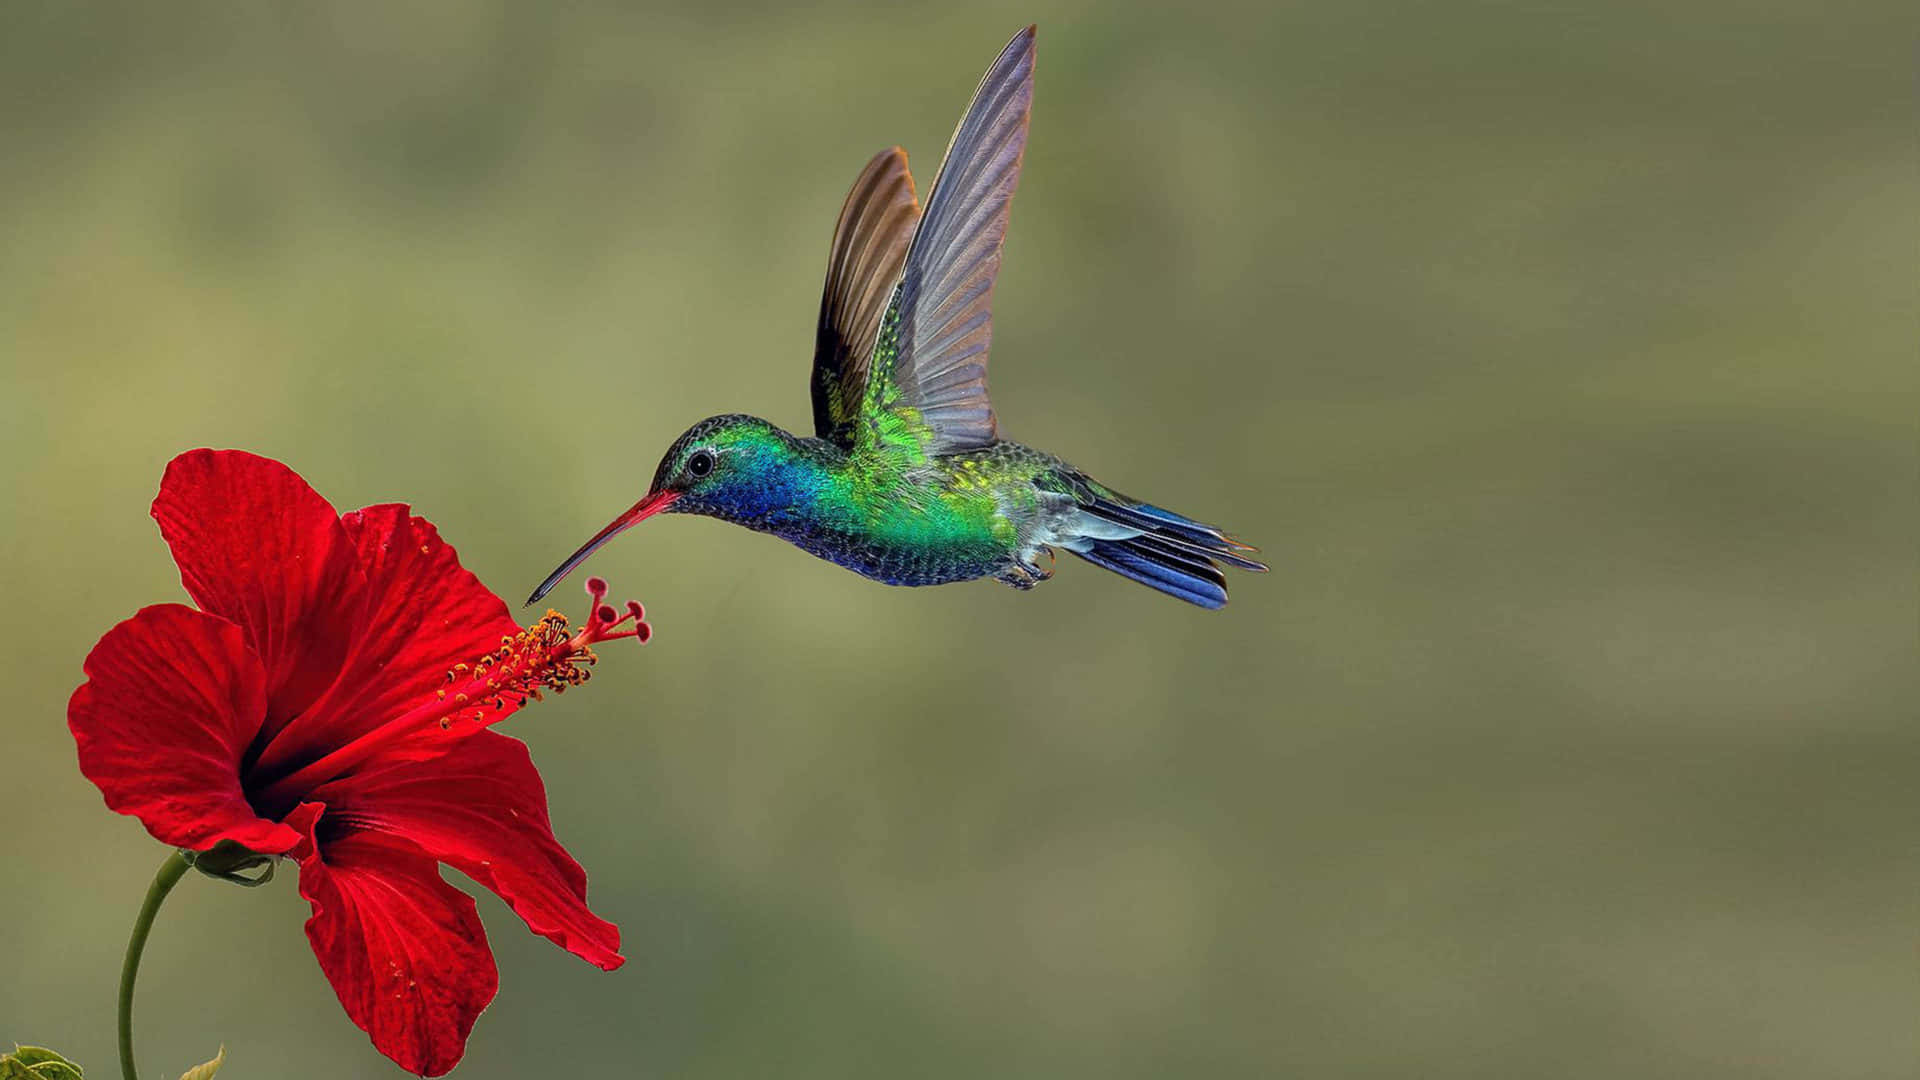 Mensden Samler Nektar Fra En Smuk Blomst, Glæder Denne Lille Kolibri Os Alle Med Dens Levende Farver.